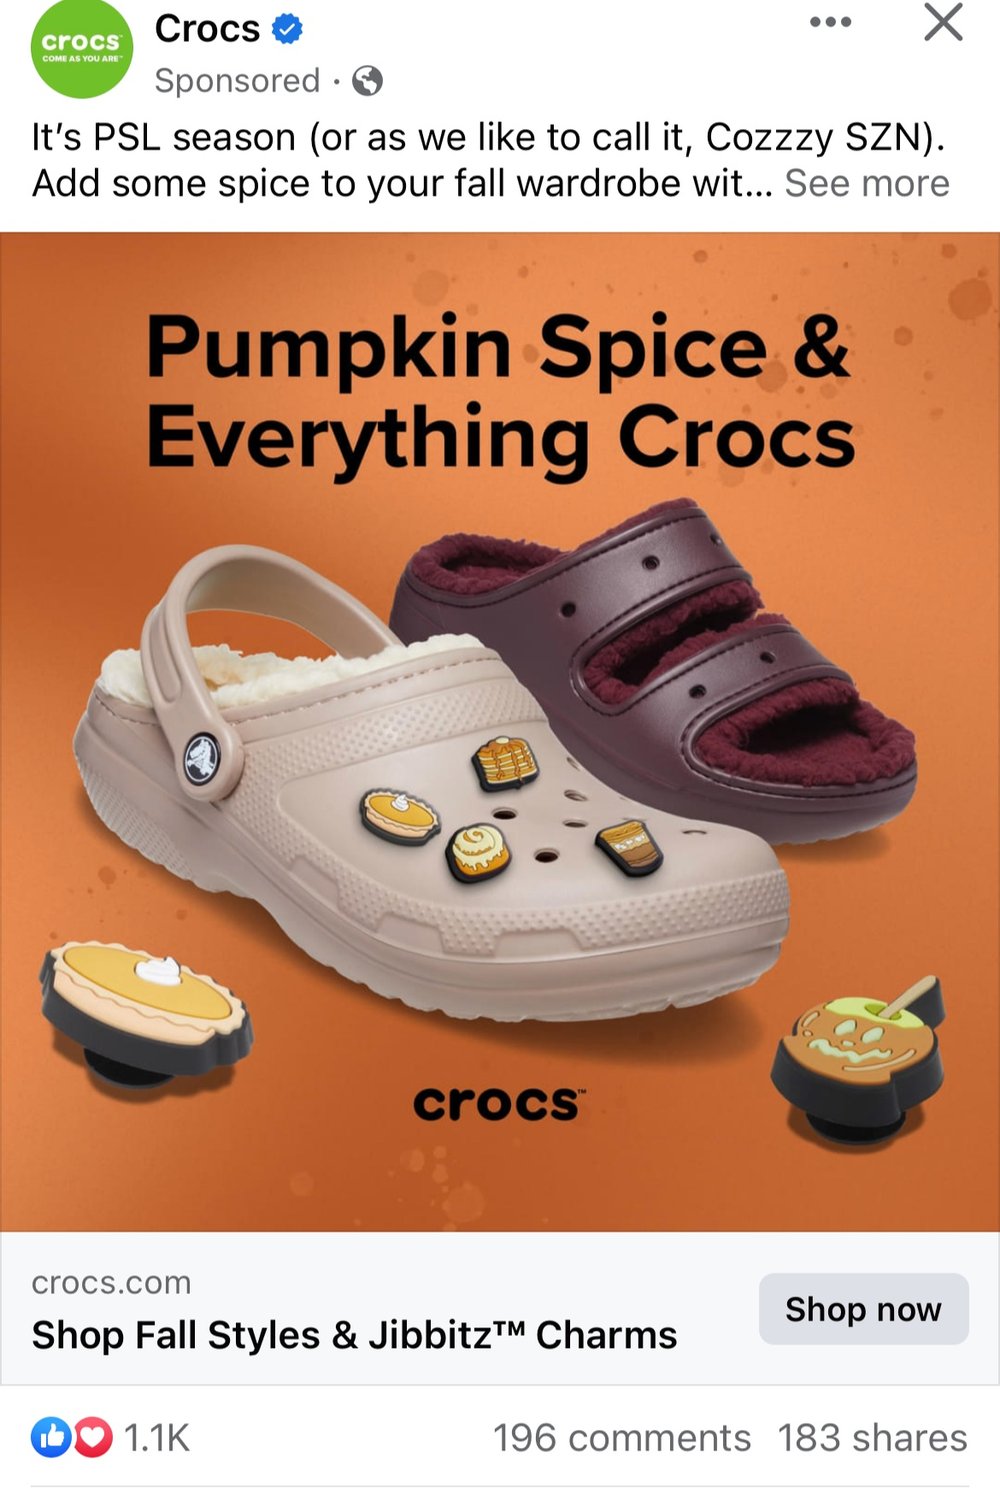 Crocs+good+graphic.jpg